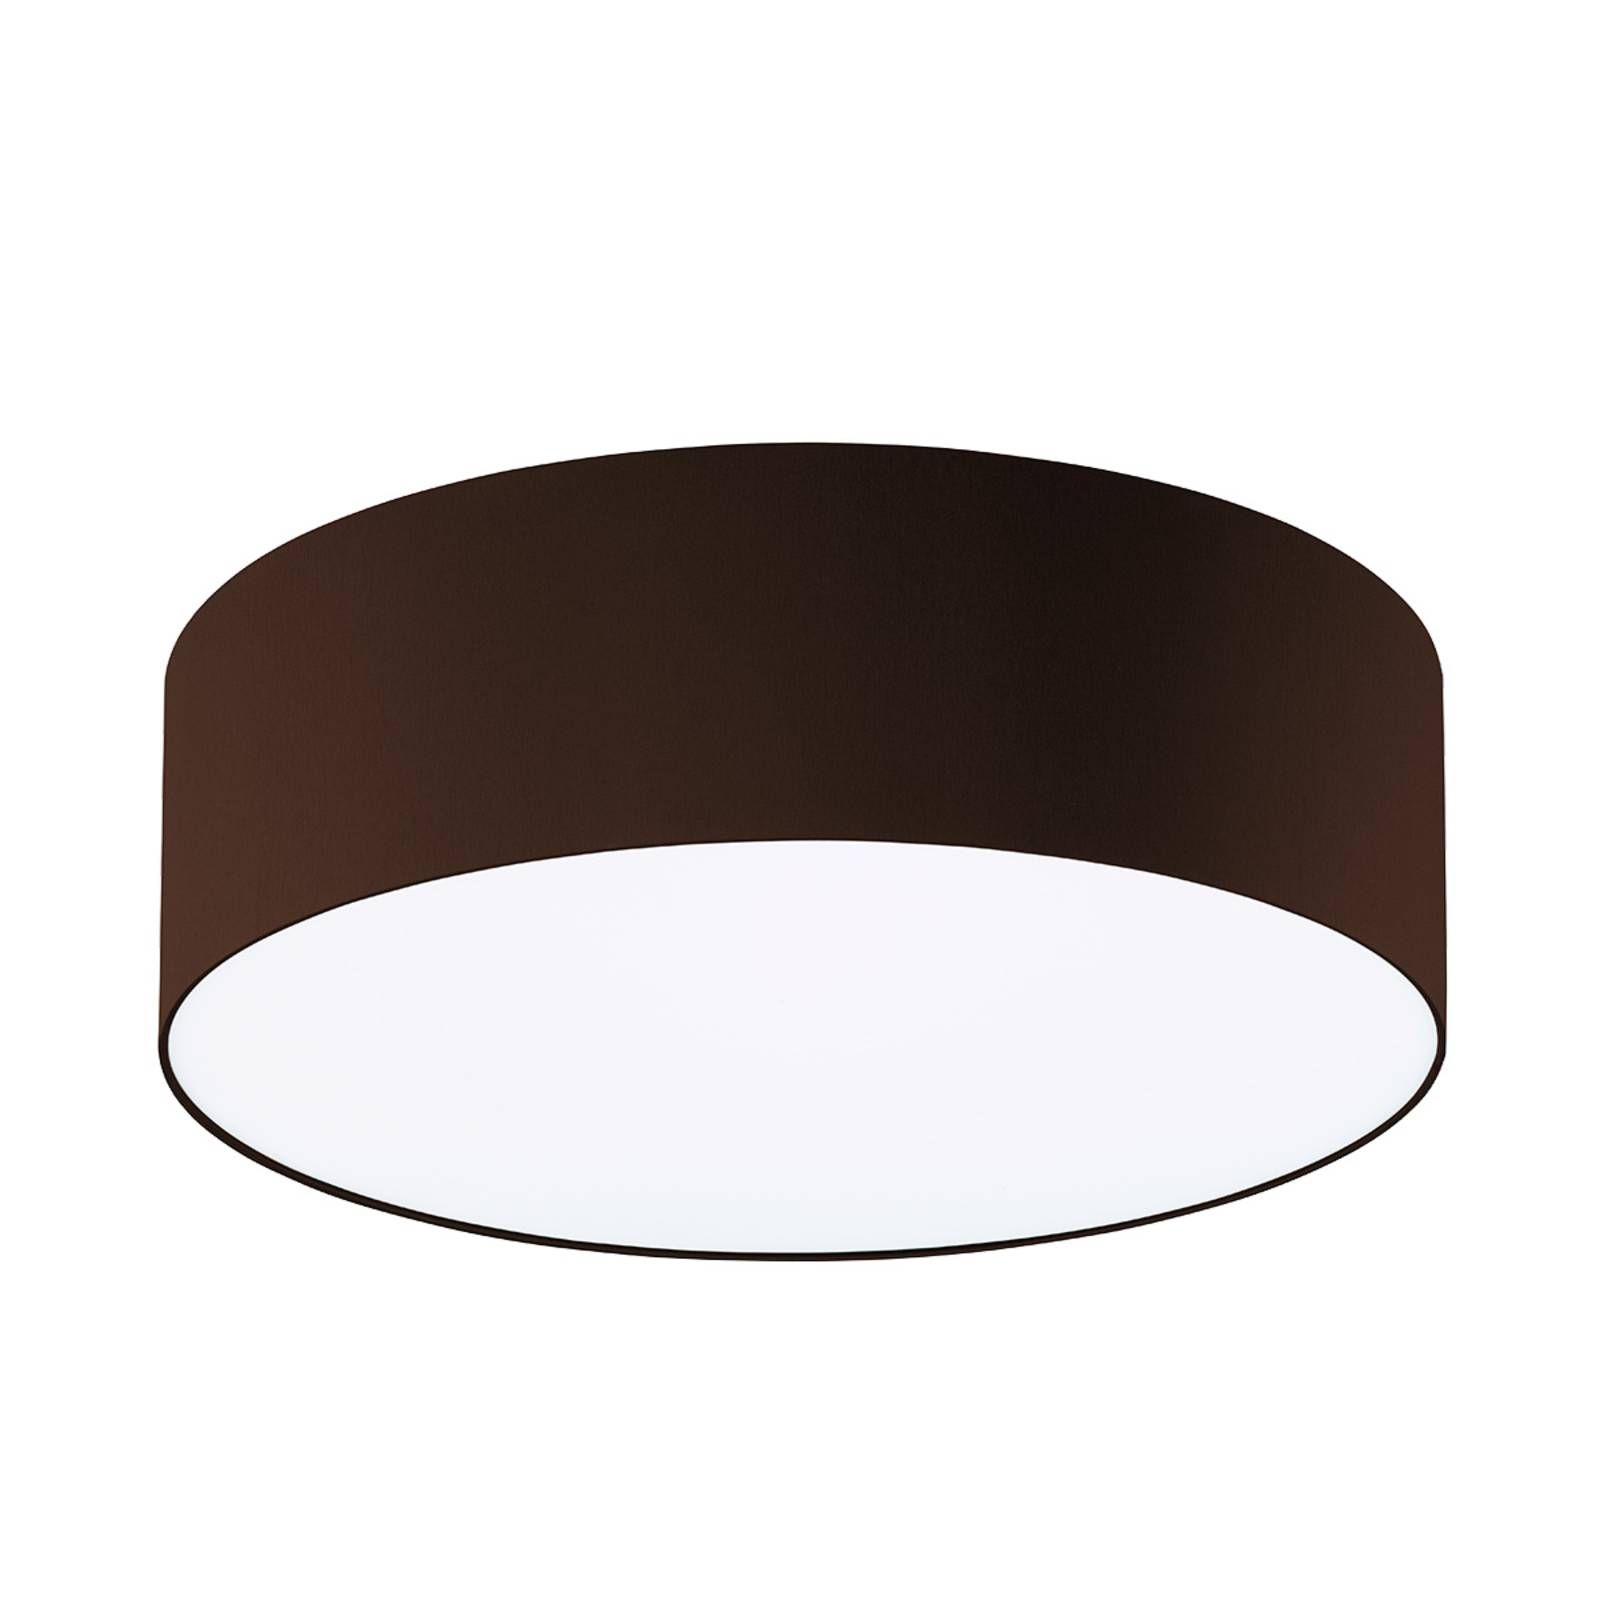 Hufnagel Kávovo-hnedé stropné svietidlo Mara, 50 cm, Obývacia izba / jedáleň, chinc, E27, 57W, K: 17cm